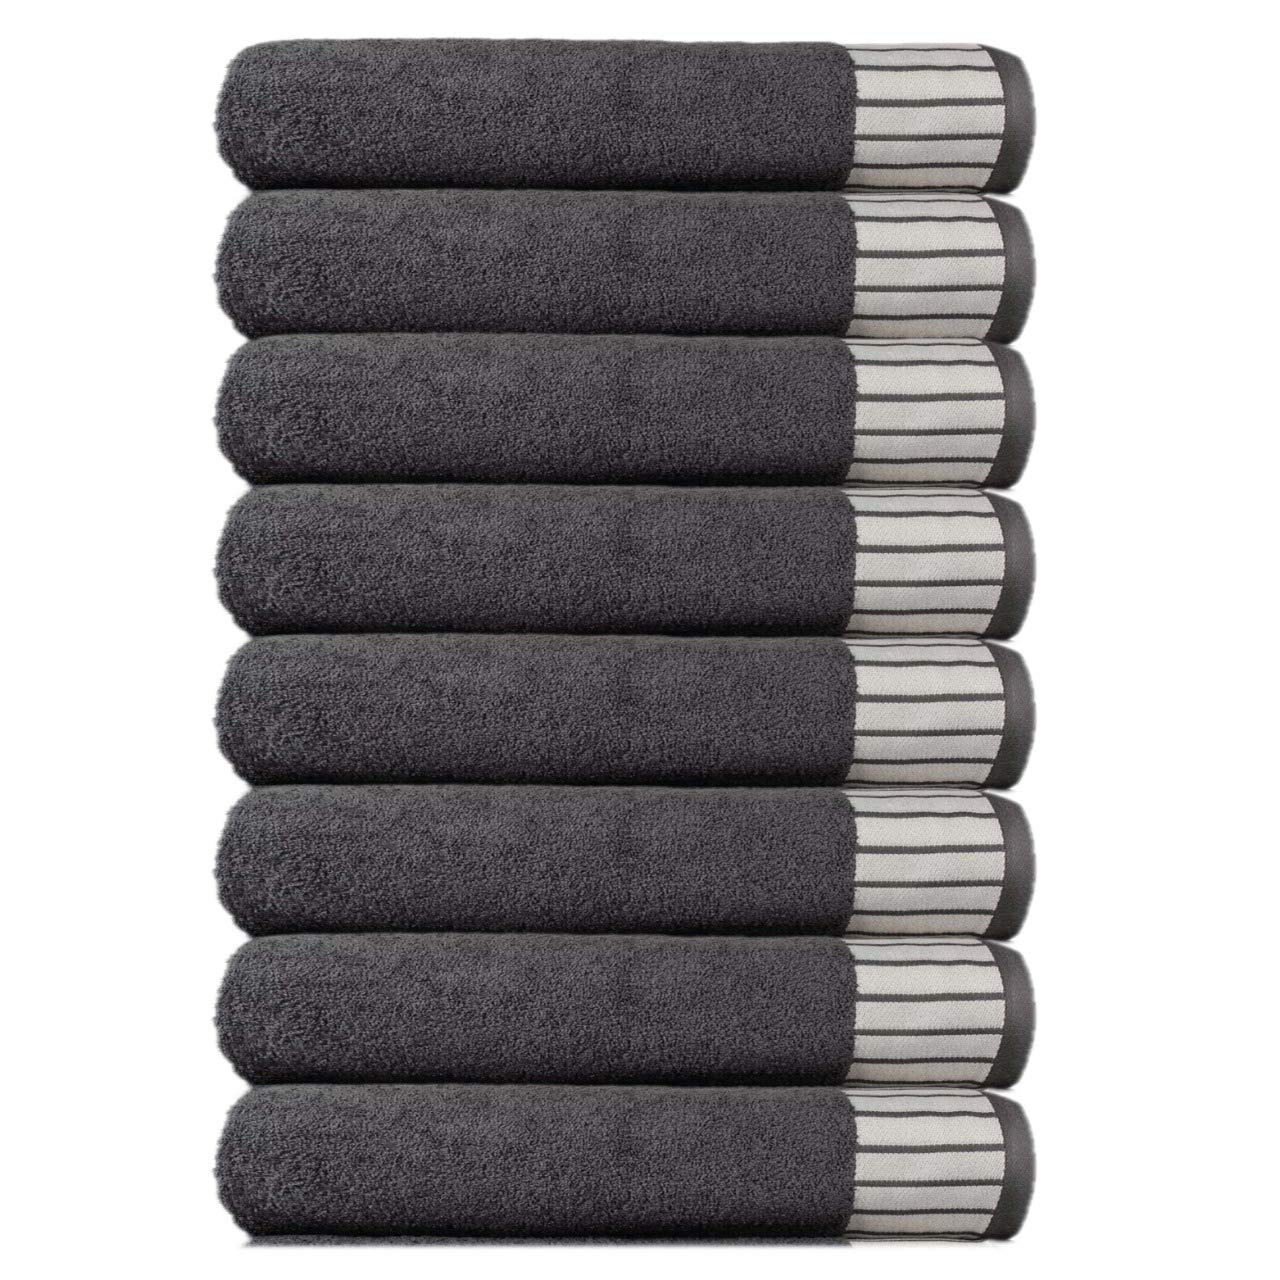 CASA COPENHAGEN Premium Towels, 8 Piece Bath Towel Set (Grey) - Egyptian Cotton - Hotel Quality - Super Soft - Highly Absorbent - Fade Resistant